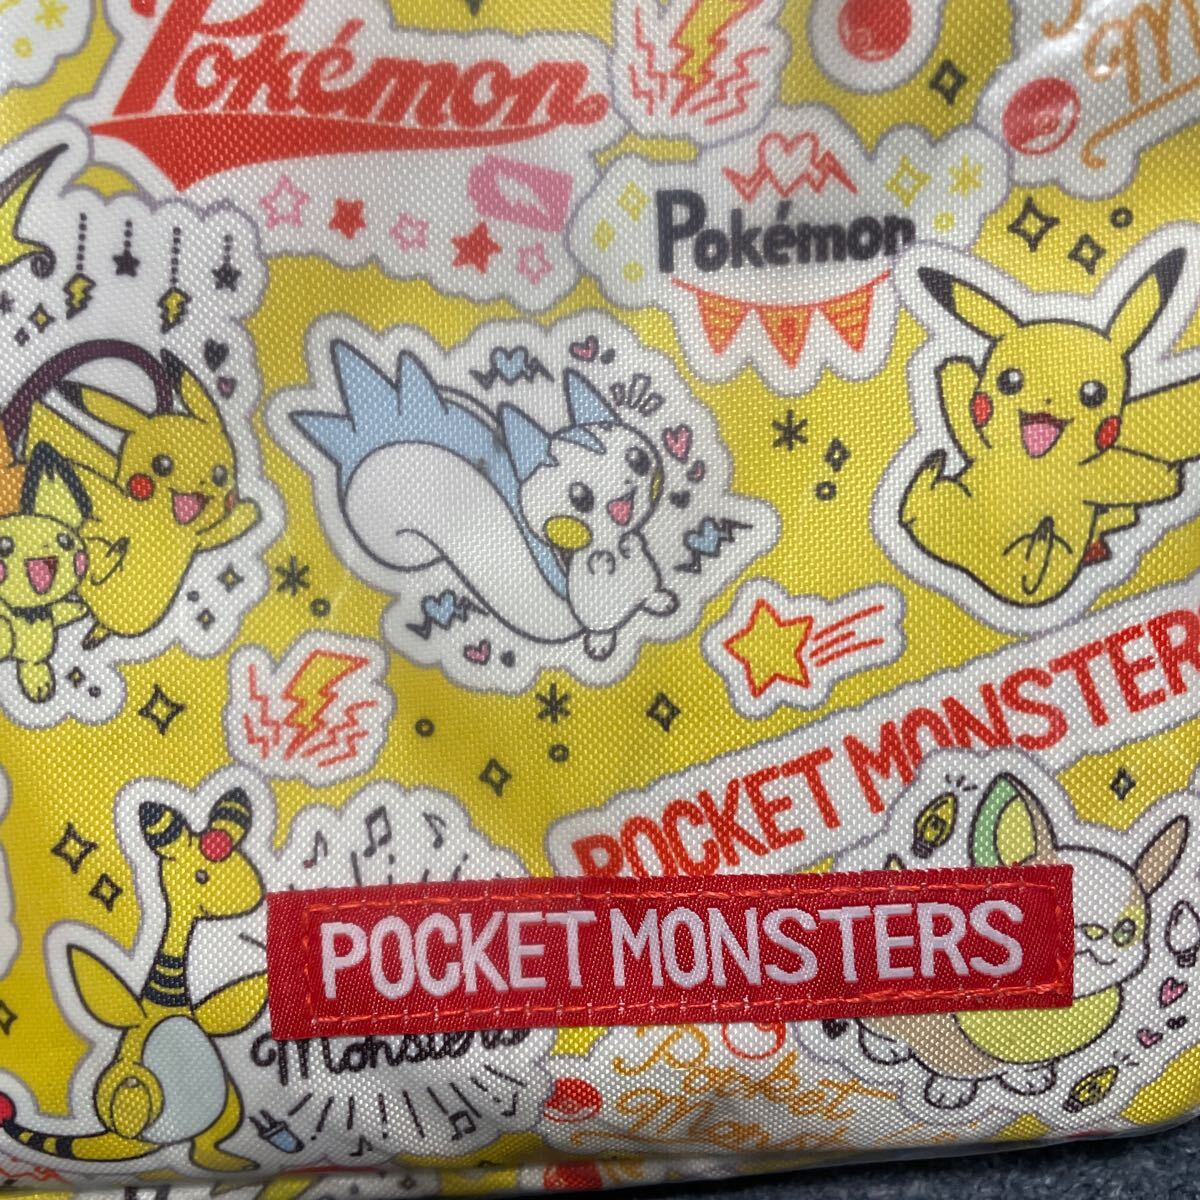  Pocket Monster premium рюкзак 